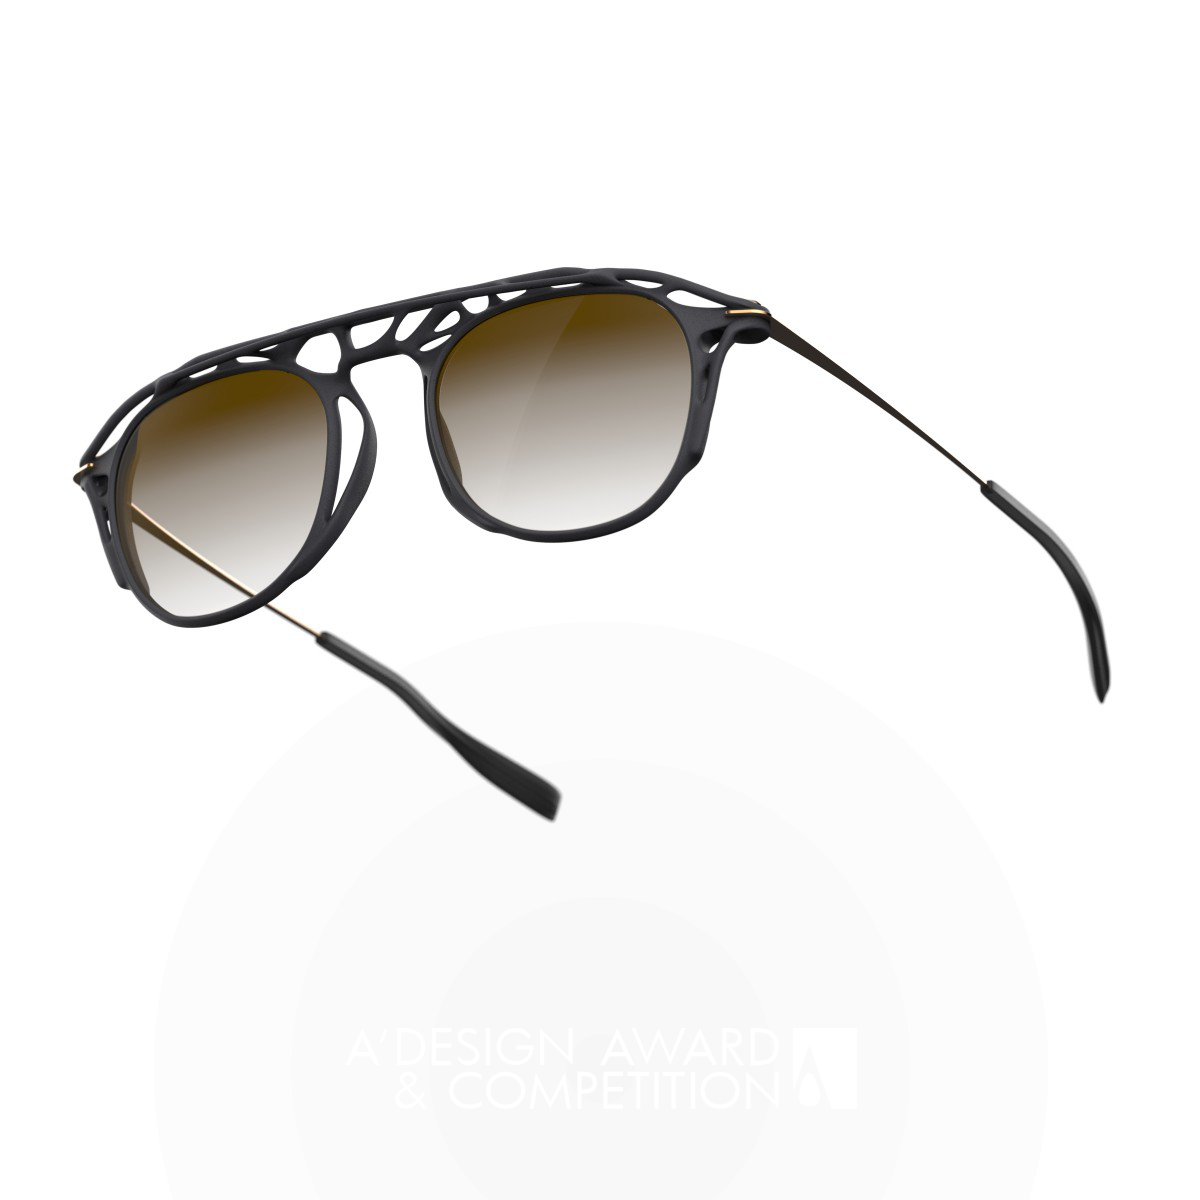 Jam-Vision X Sbrusset Sunglasses by Brusset Sébastien